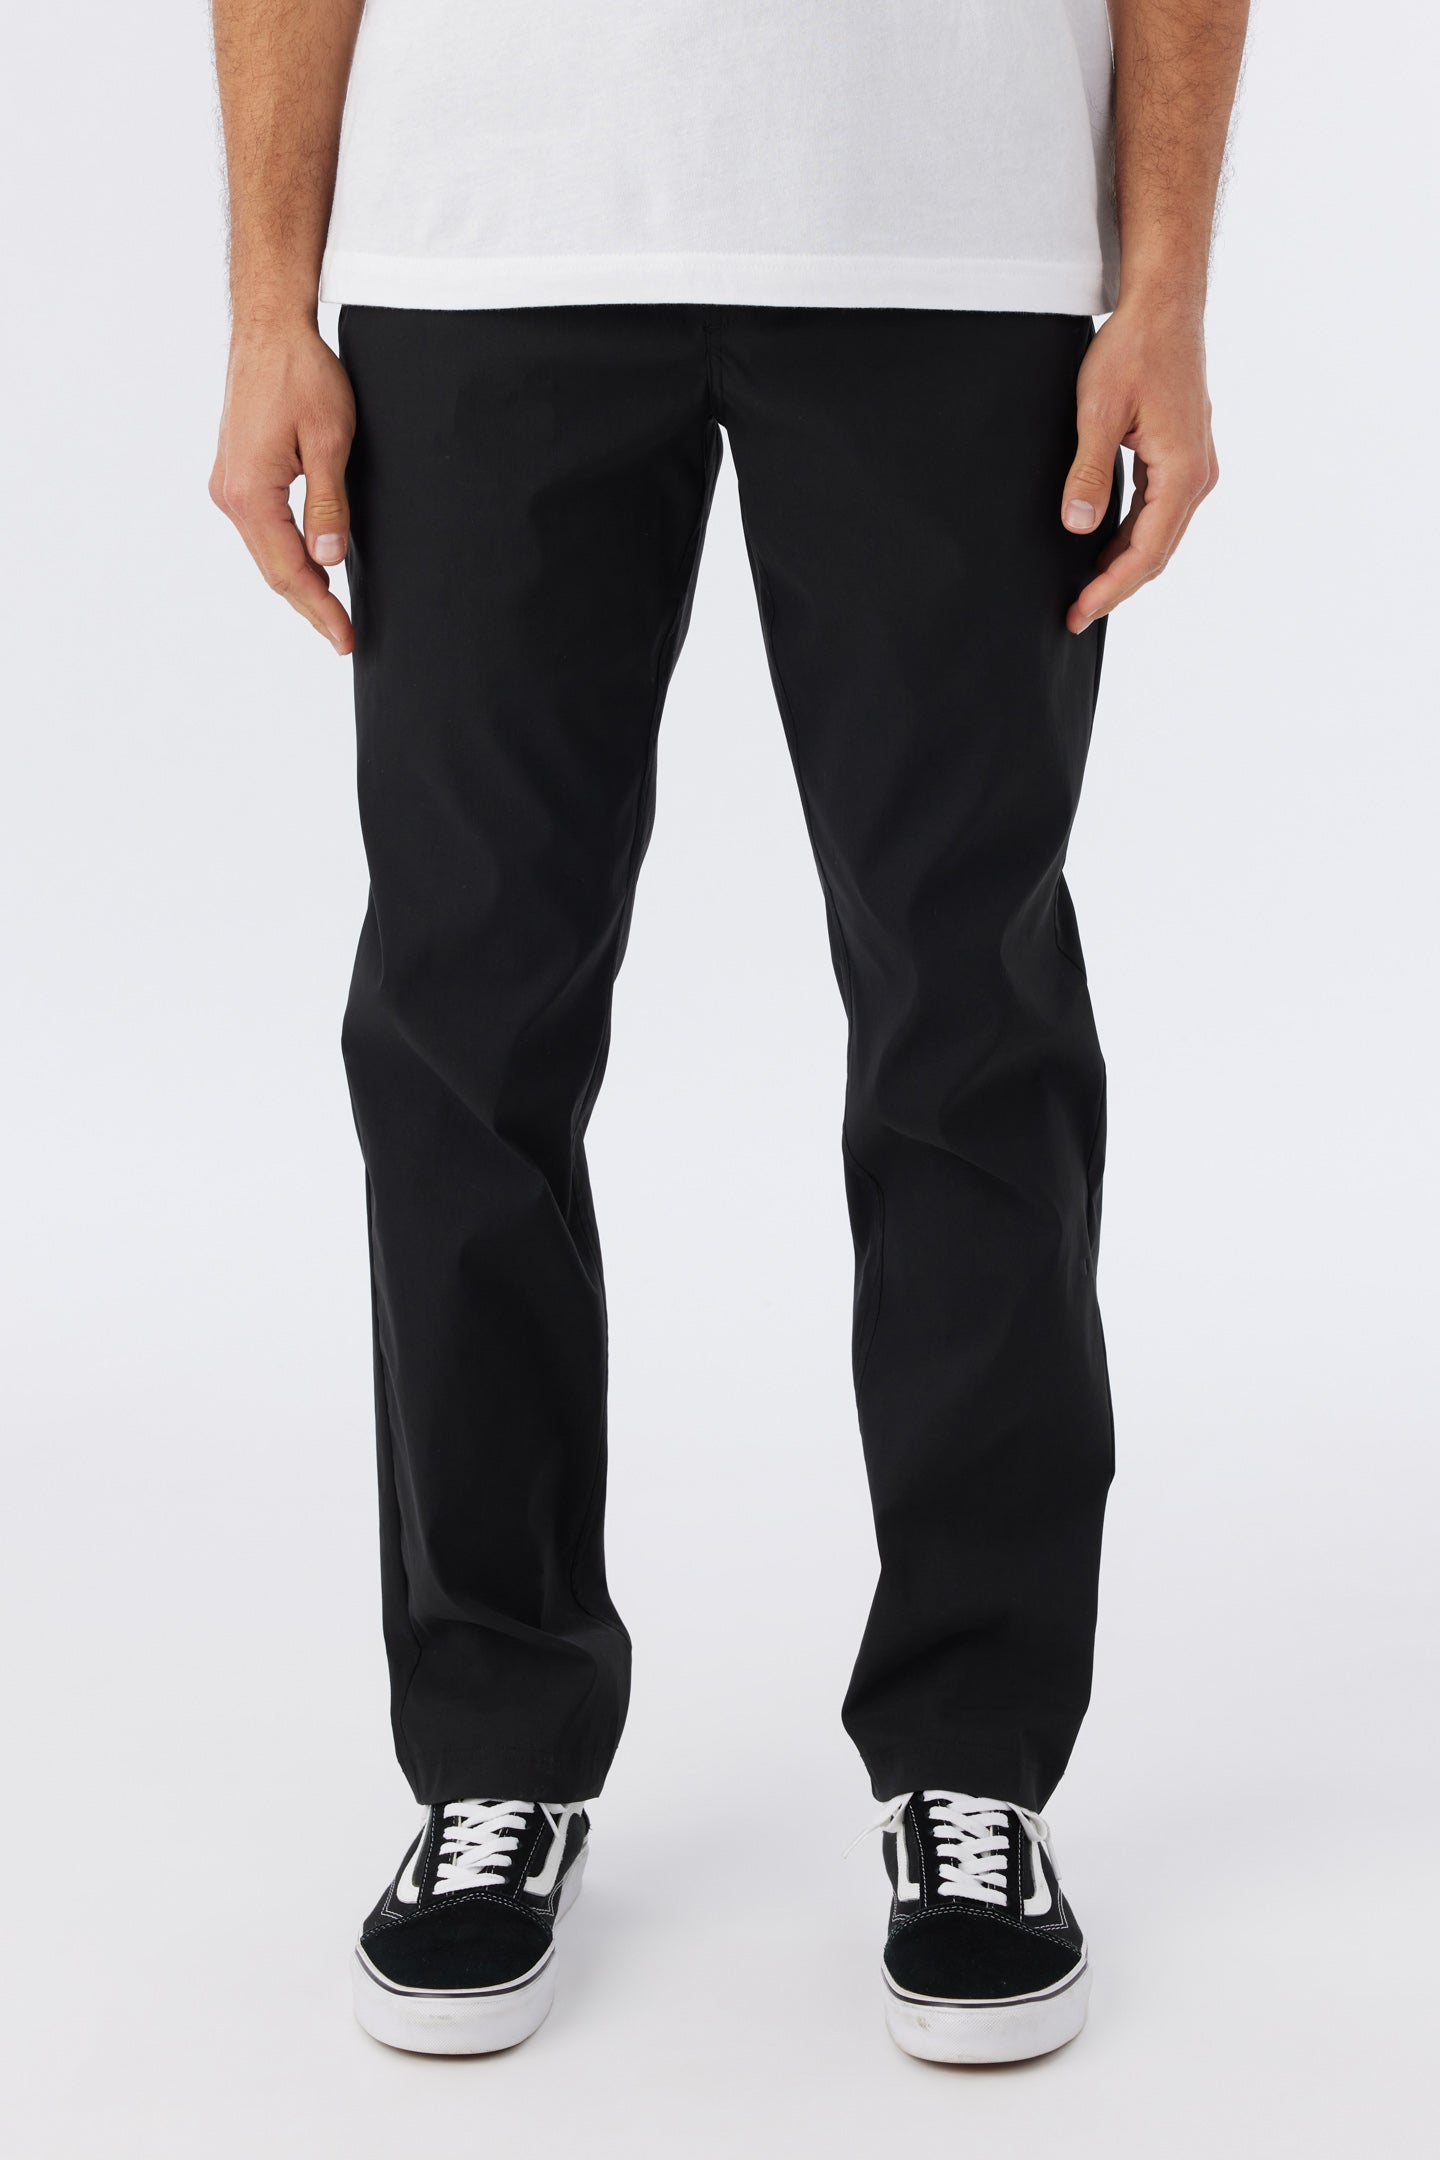 Trvlr Coast Hybrid Pants - Black | O'Neill